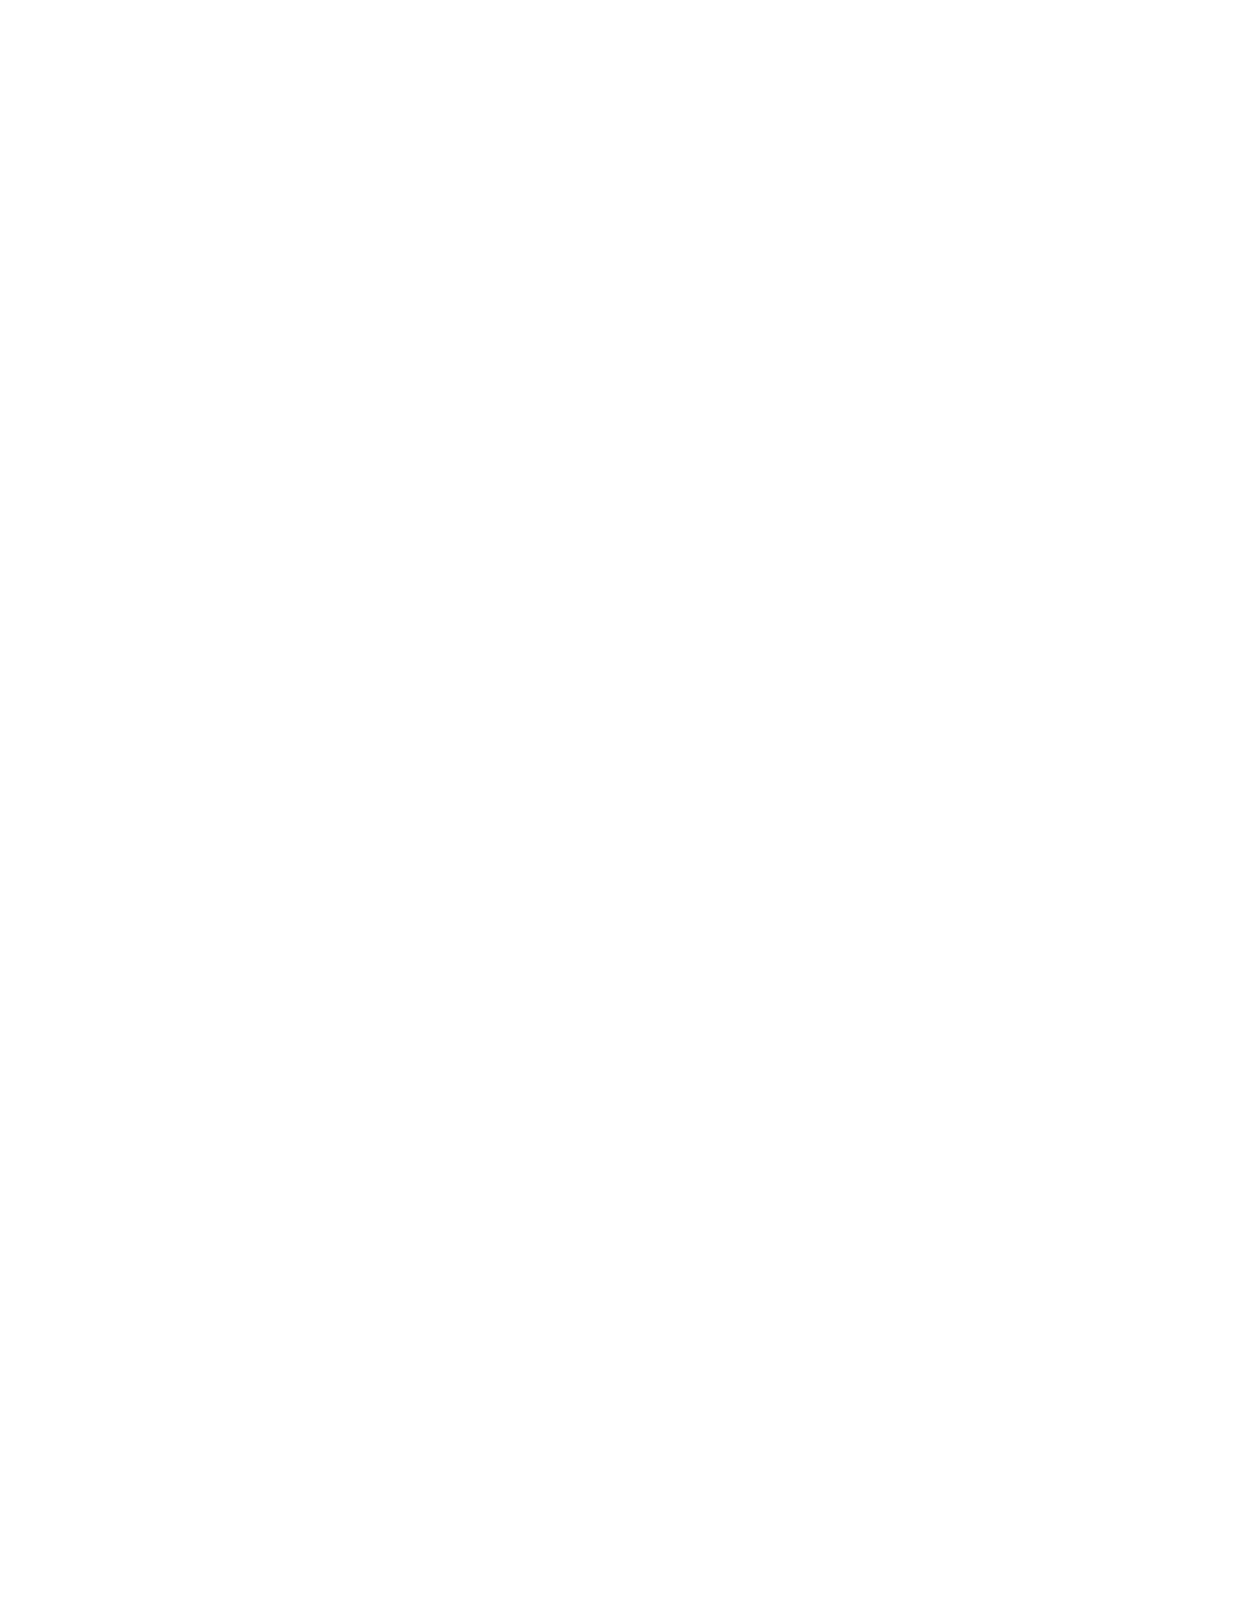 Looker magazine cover, Фотограф Георгий Безбородов / Georgy Bezborodov, искусство фотографии, фотоискусство, арт фото, портрет архитектора Юлия Барискина